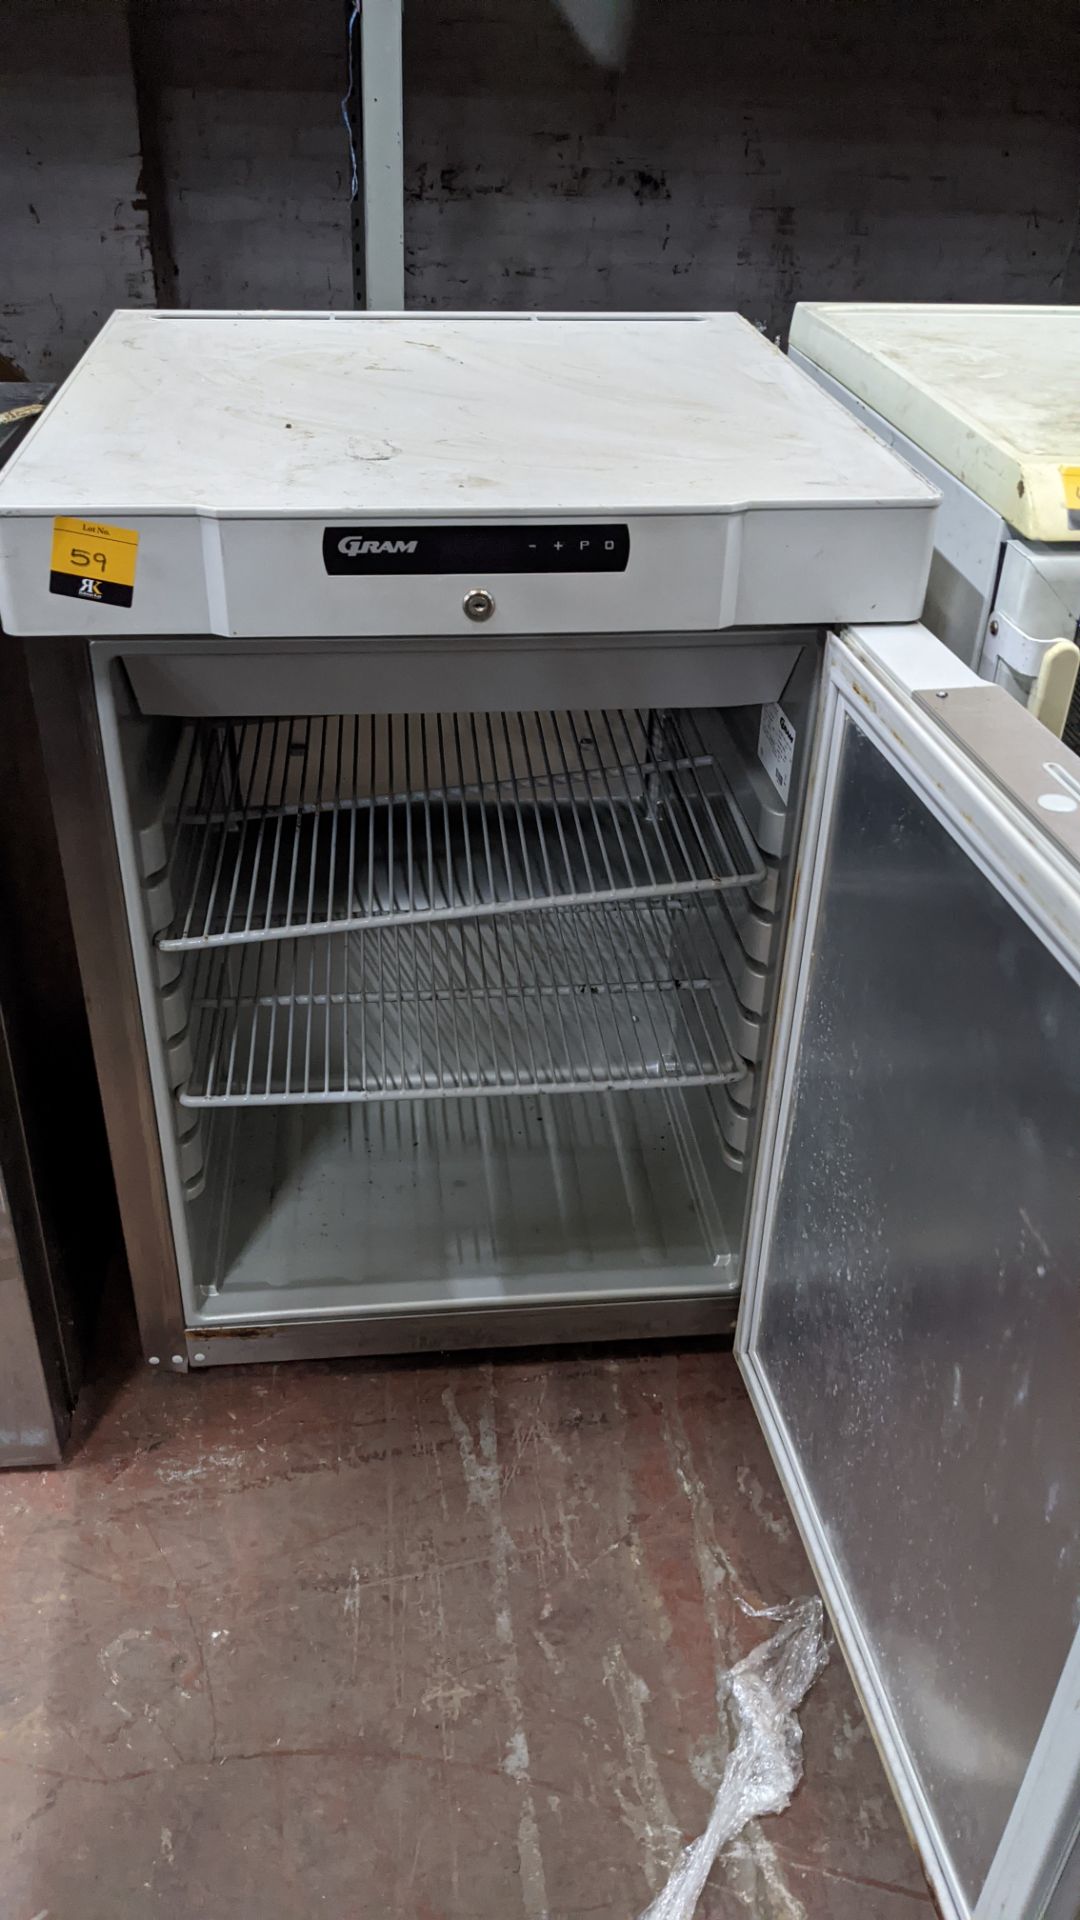 Gram F210 undercounter freezer - Image 3 of 4